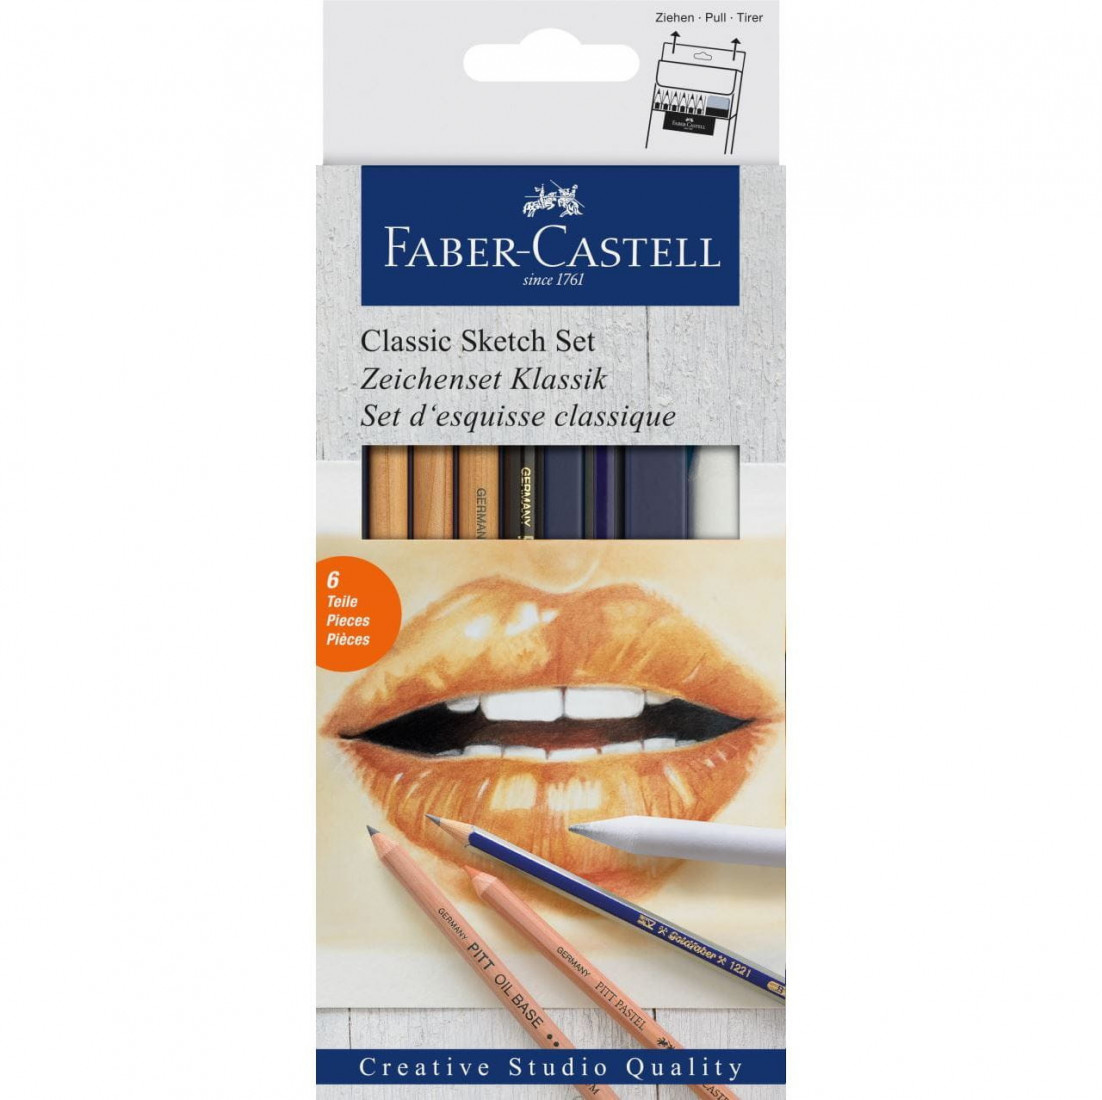 Faber Castell Pitt Artist Pen Brush, Pastel - Wallet of 6 - 167163